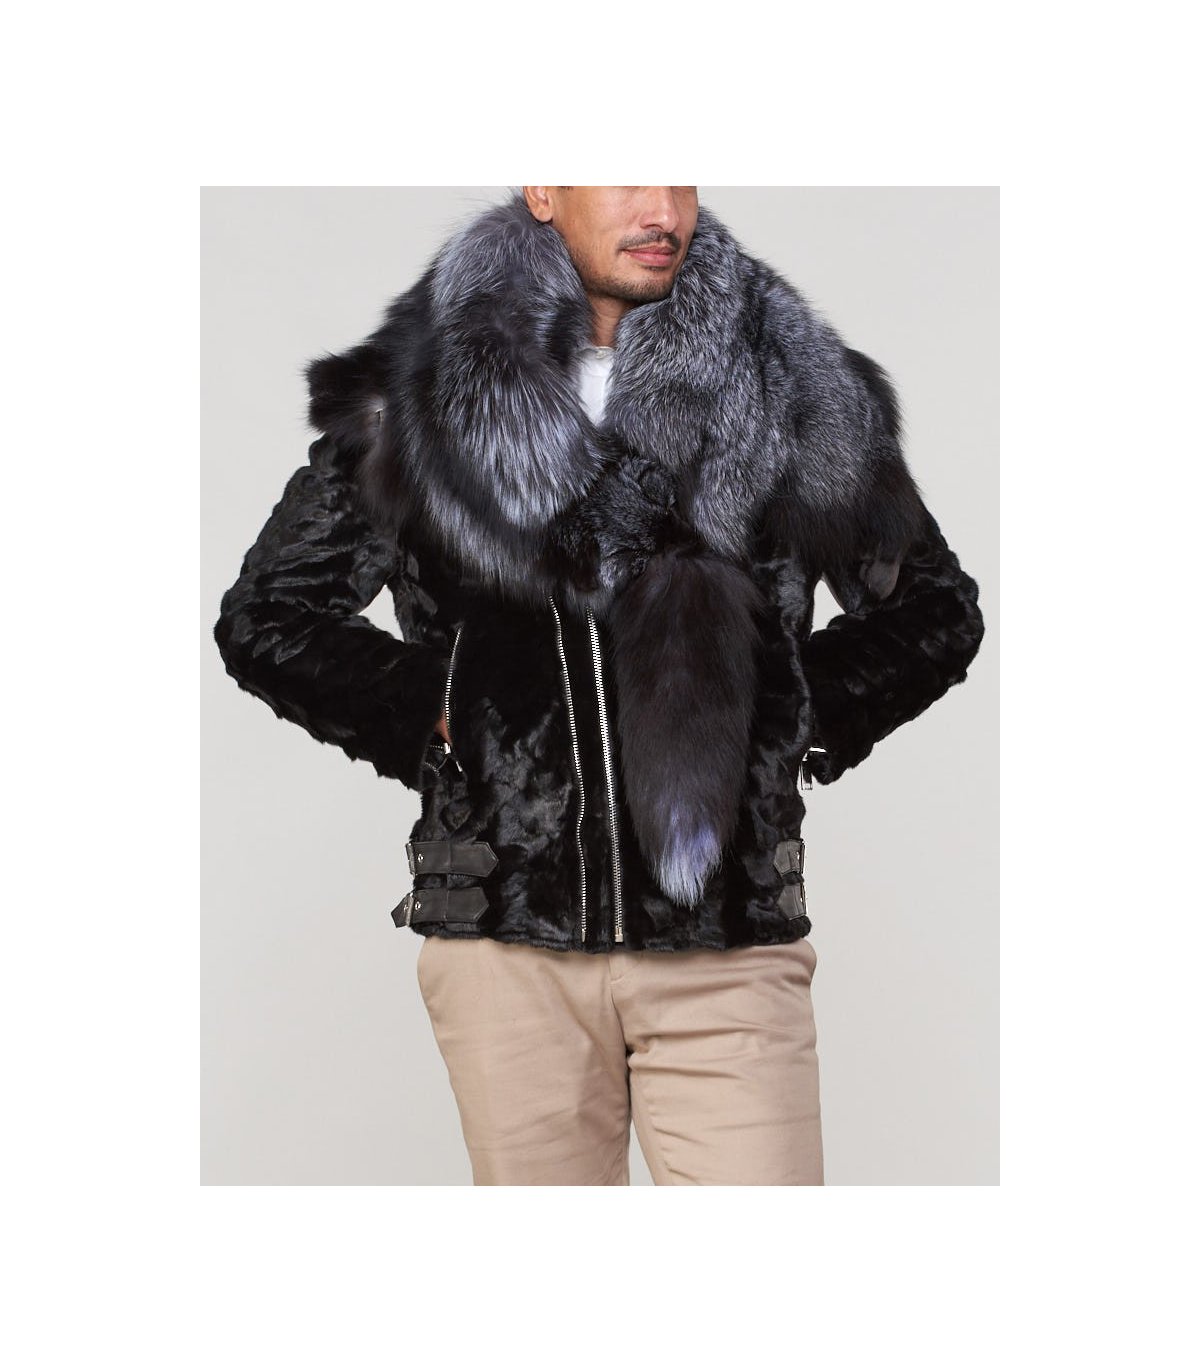 fox fur collar leather jacket